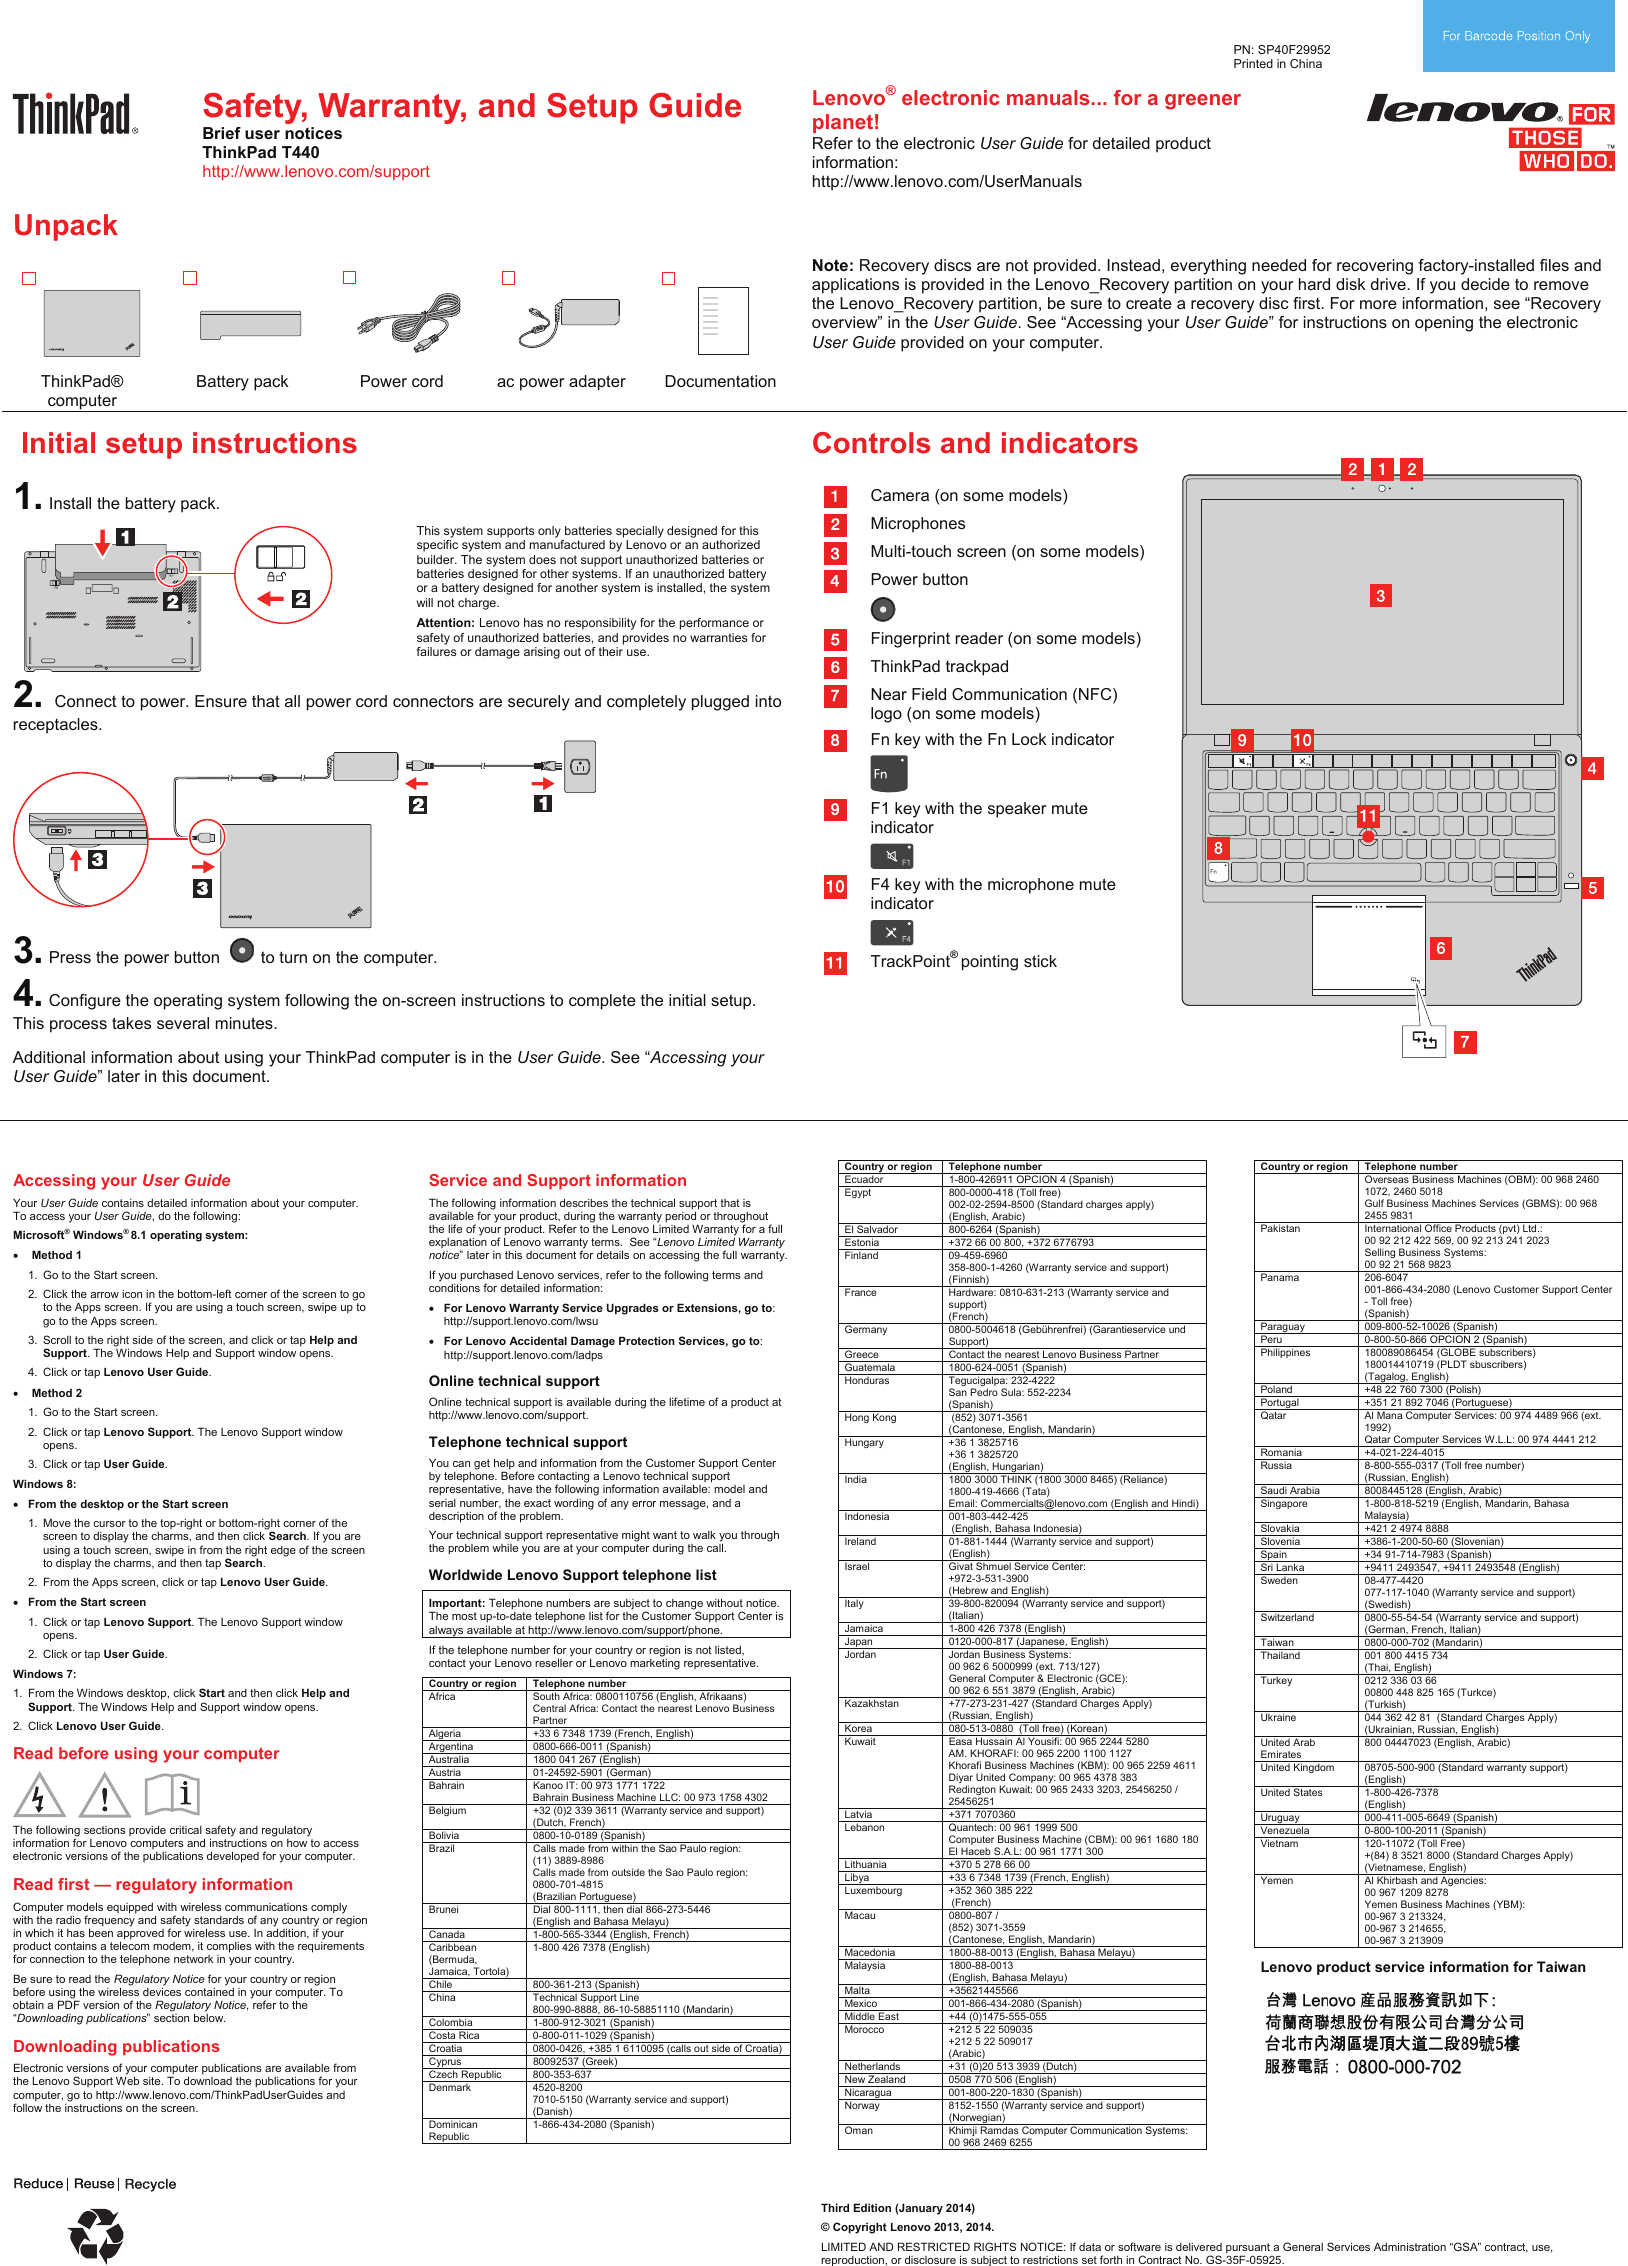 Lenovo thinkpad t440 user guide vortech v3